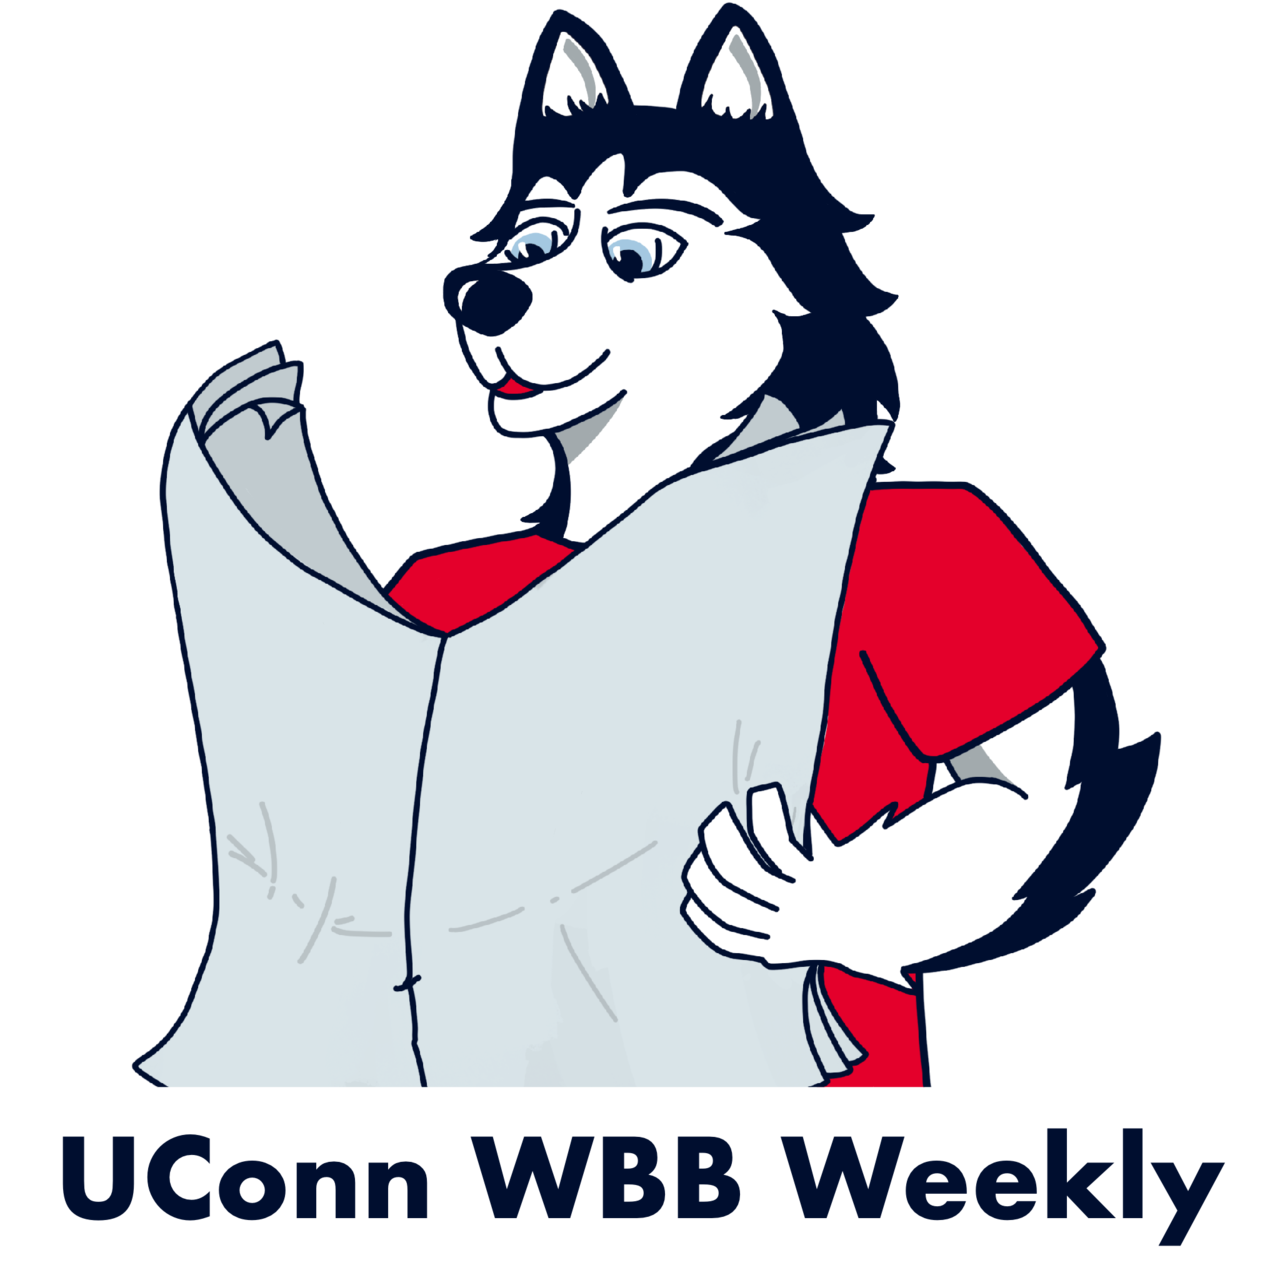 UConn WBB Weekly